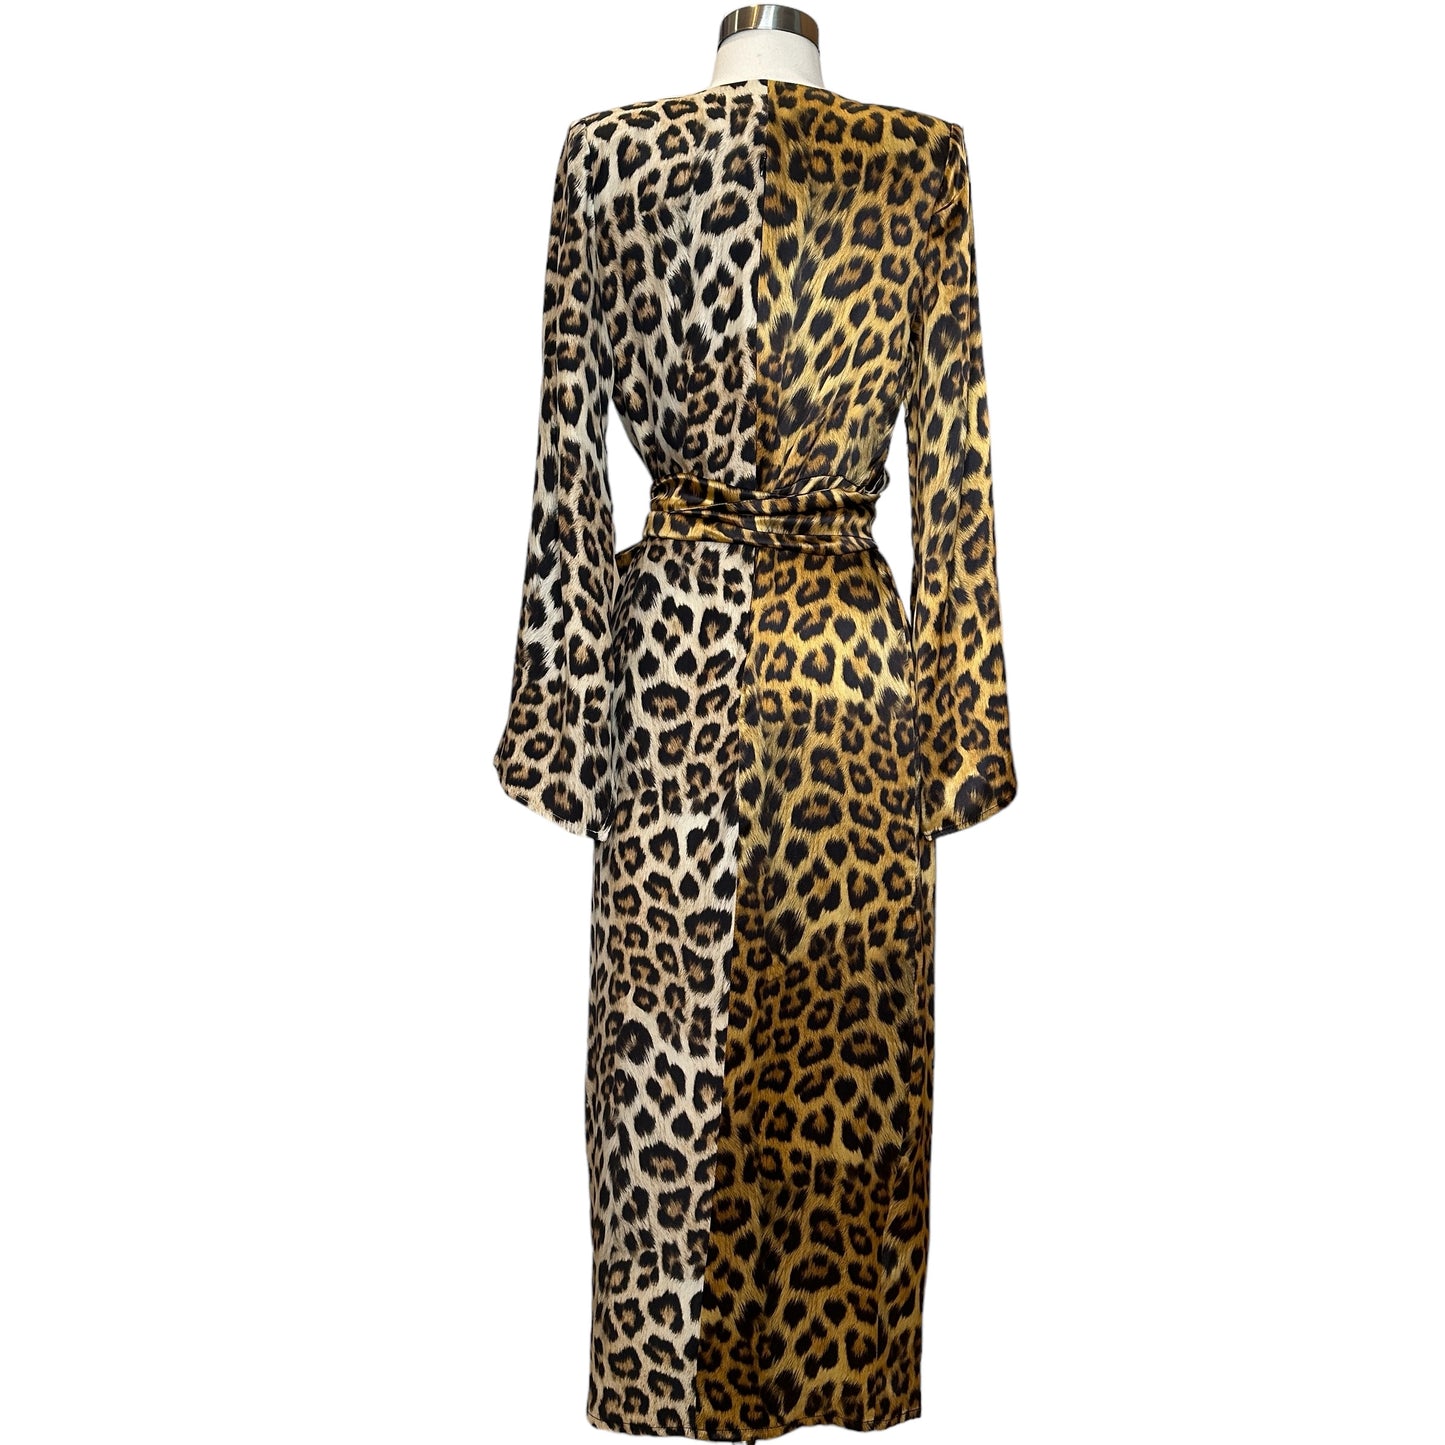 Leopard Silk Dress - S